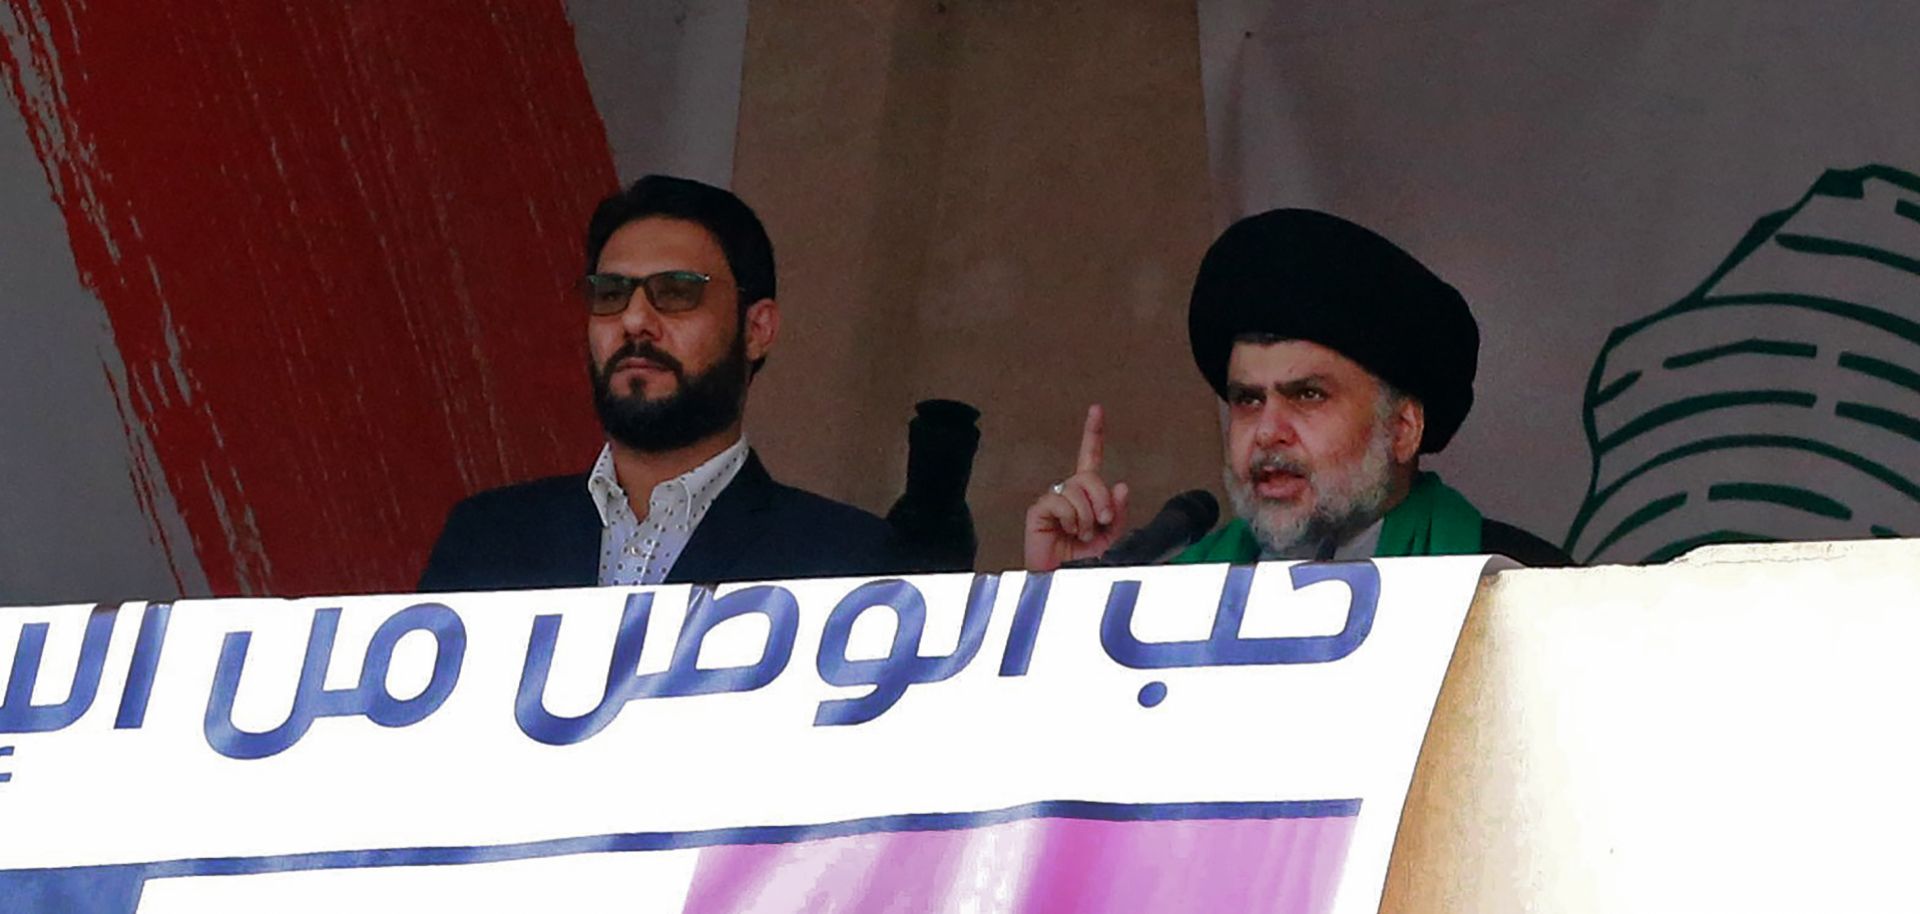 Shiite leader Muqtada al-Sadr (R) delivers a speech in Baghdad in March 2017.